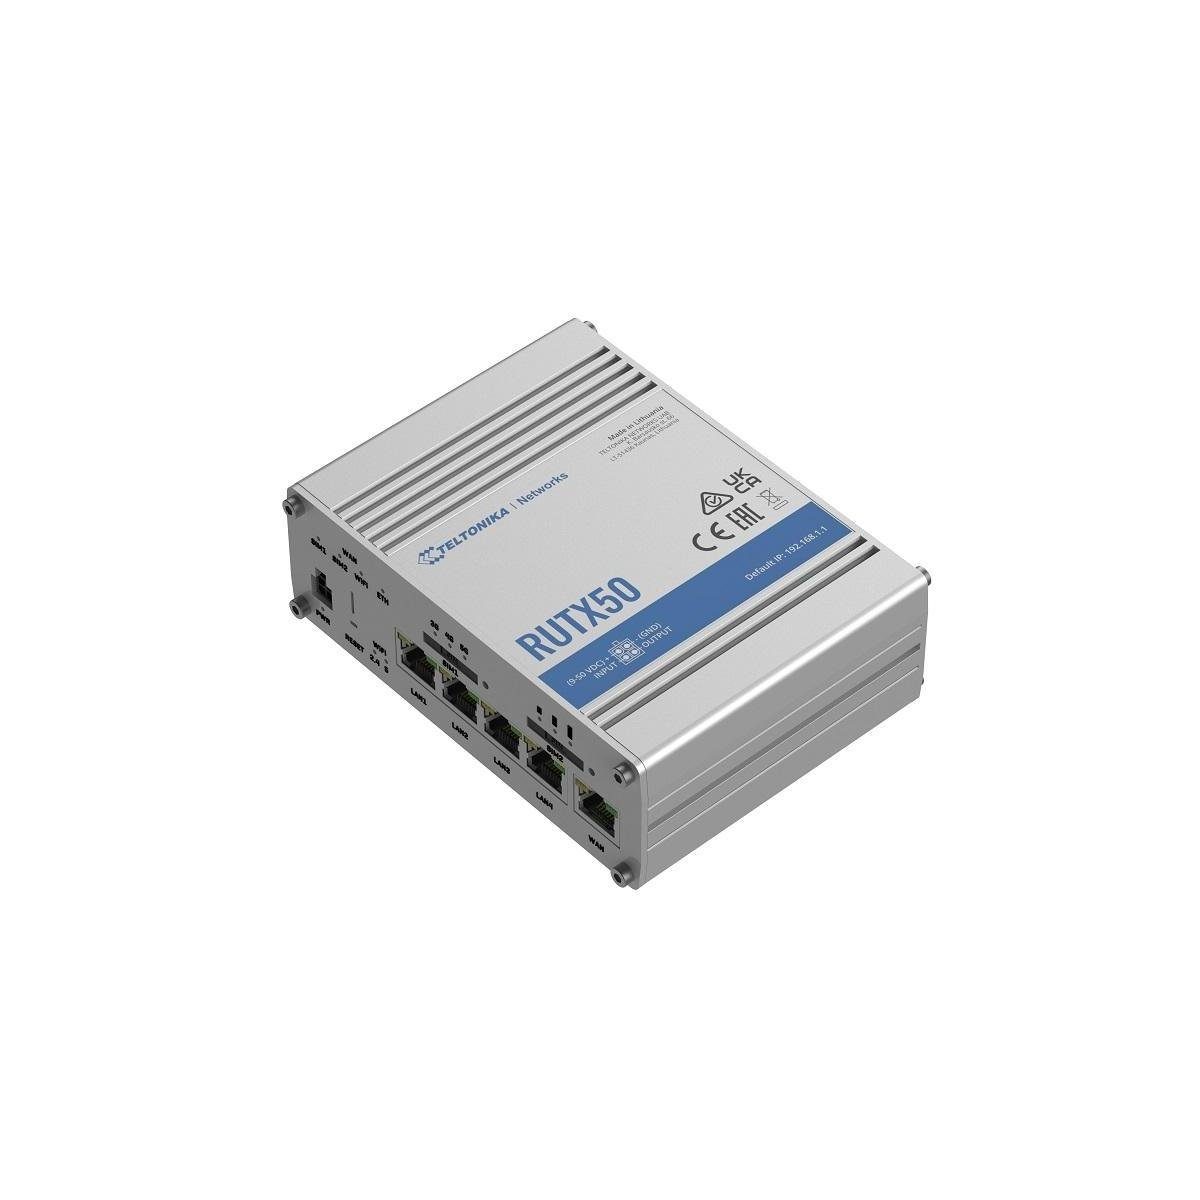 Teltonika RUTX50 - Industrieller 5G-Router 4G/LTE-Router